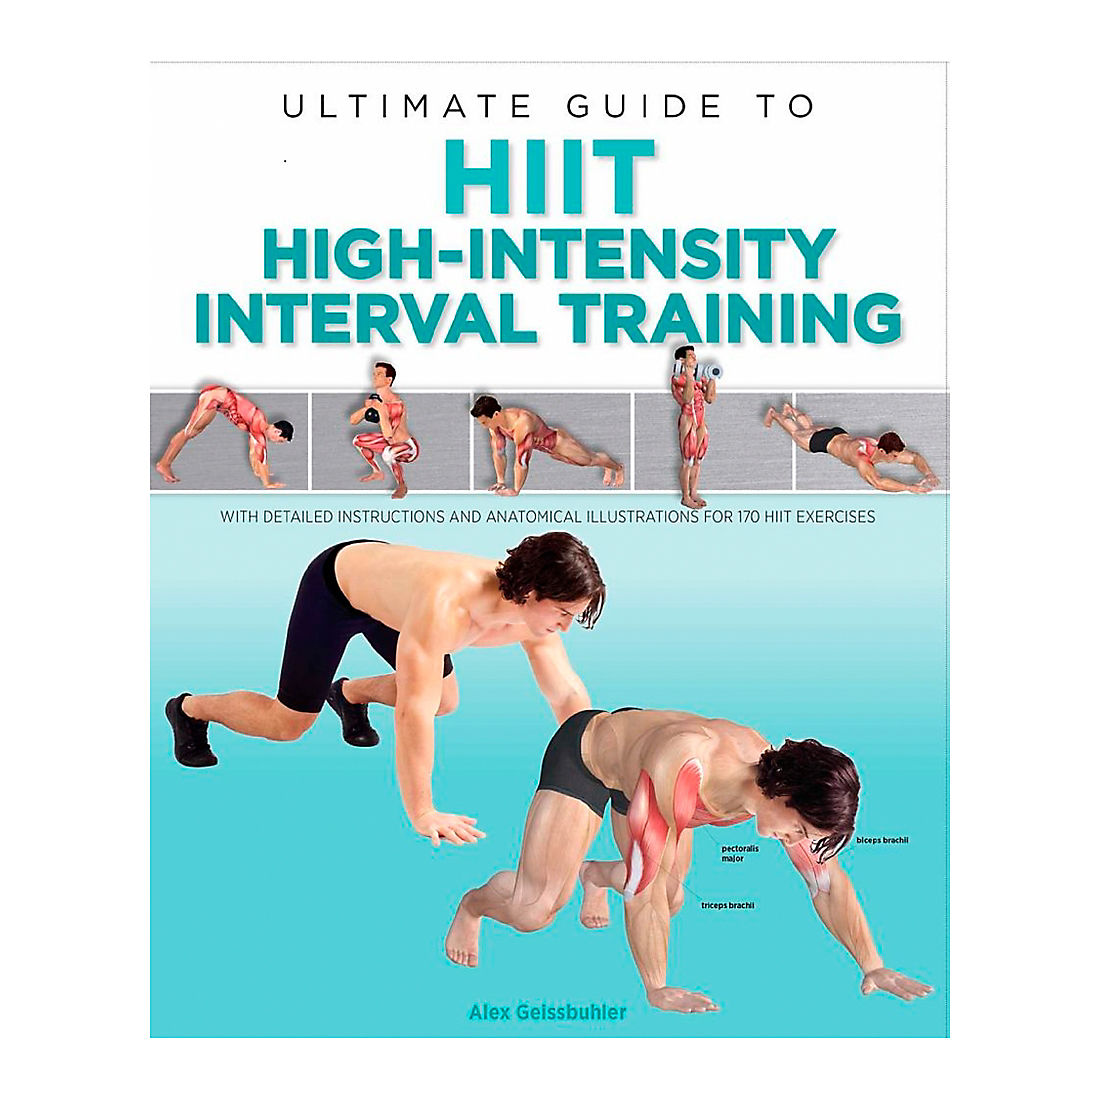 Intense interval training